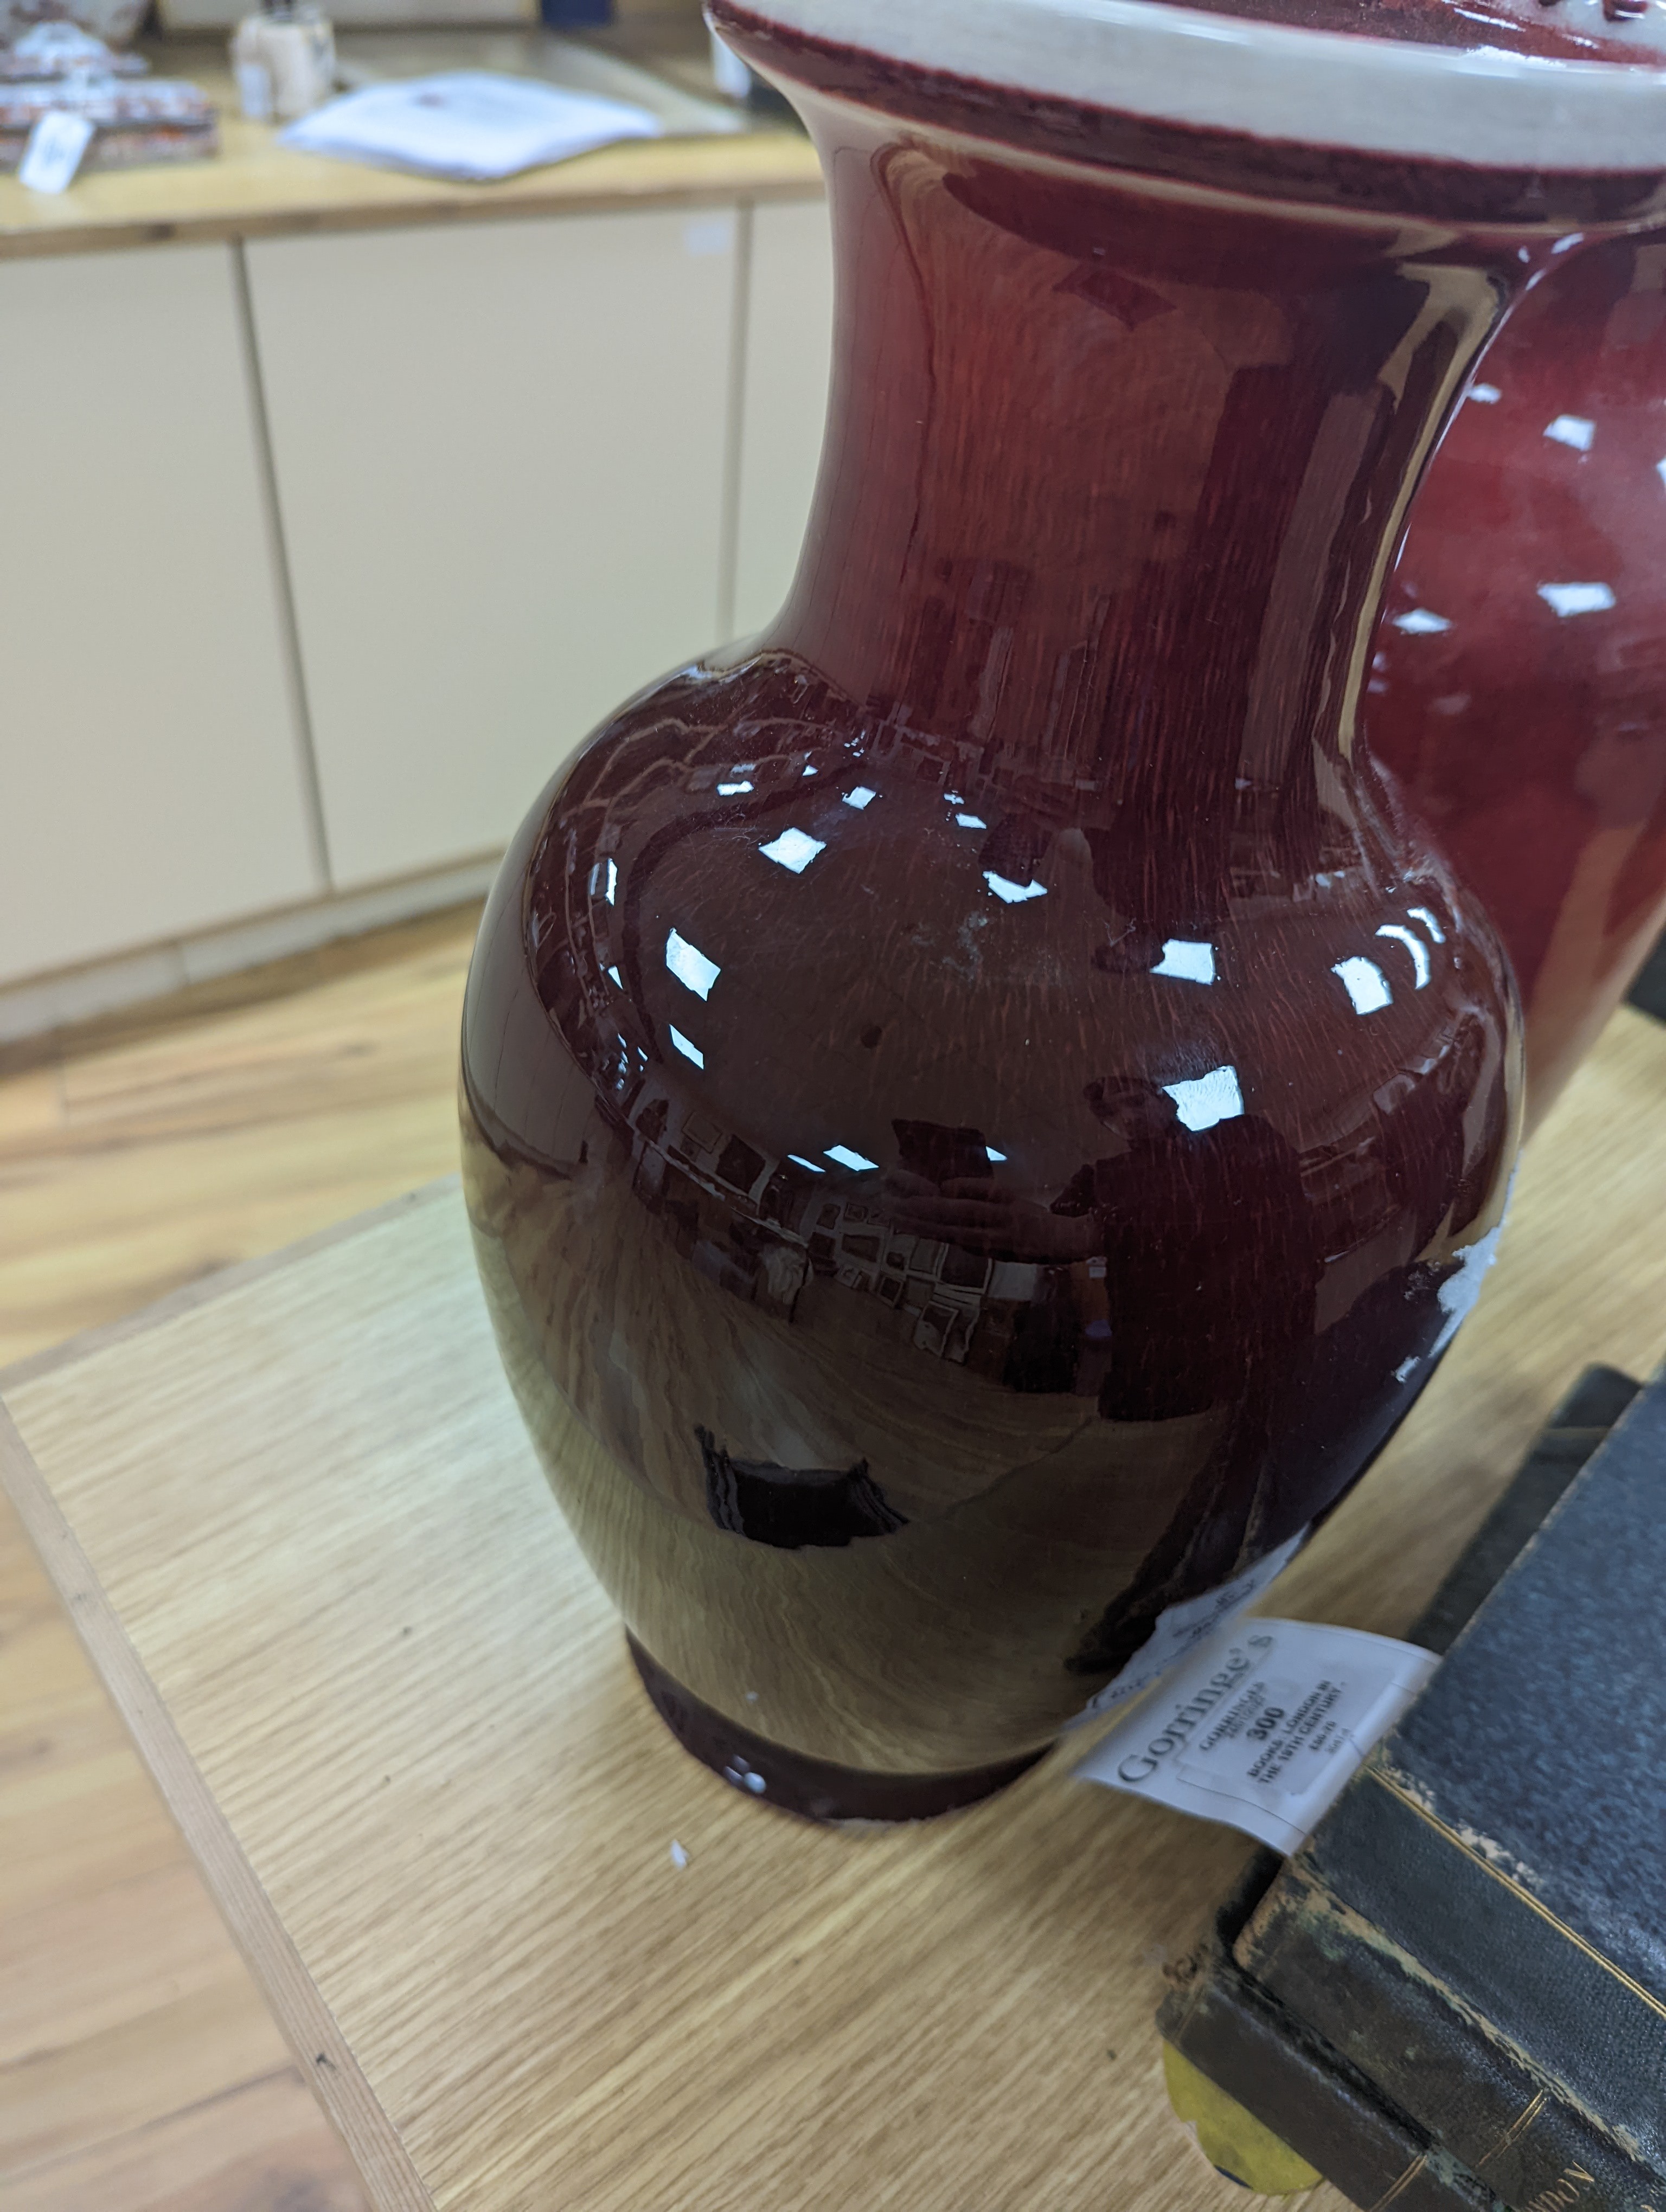 Two large Chinese sang de boeuf glazed vases tallest 36cm